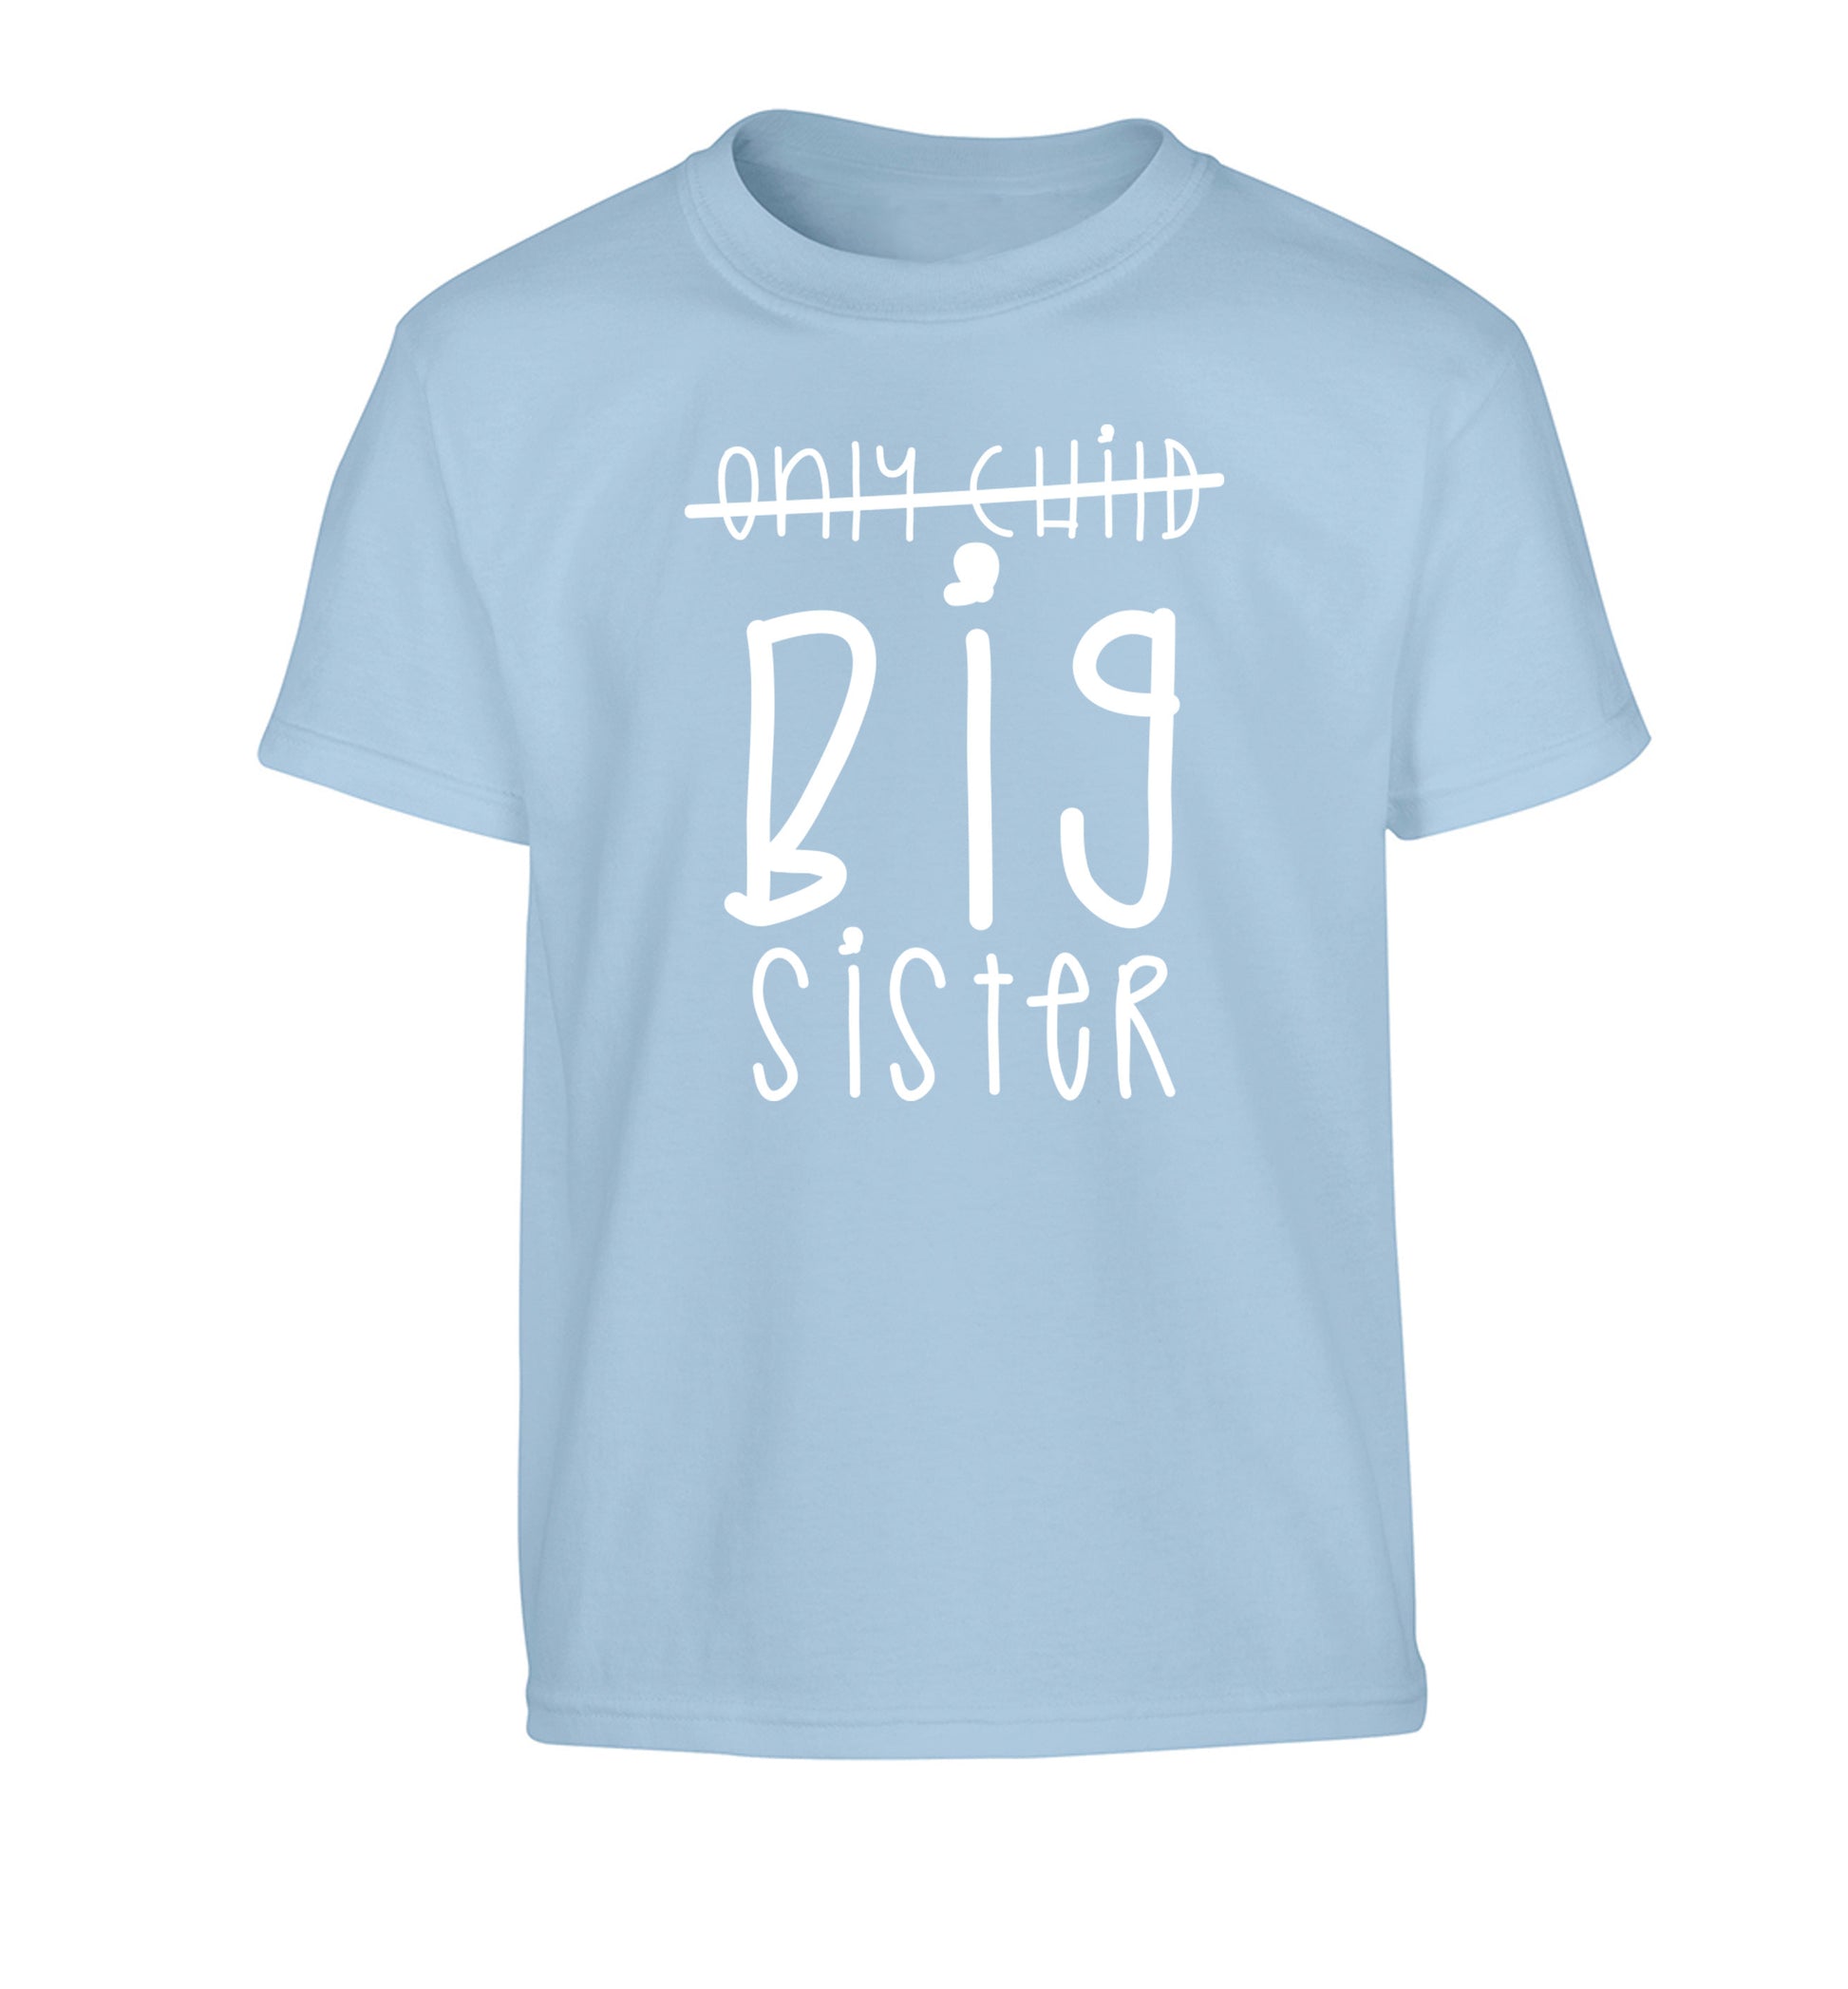 Only child big sister Children's light blue Tshirt 12-14 Years